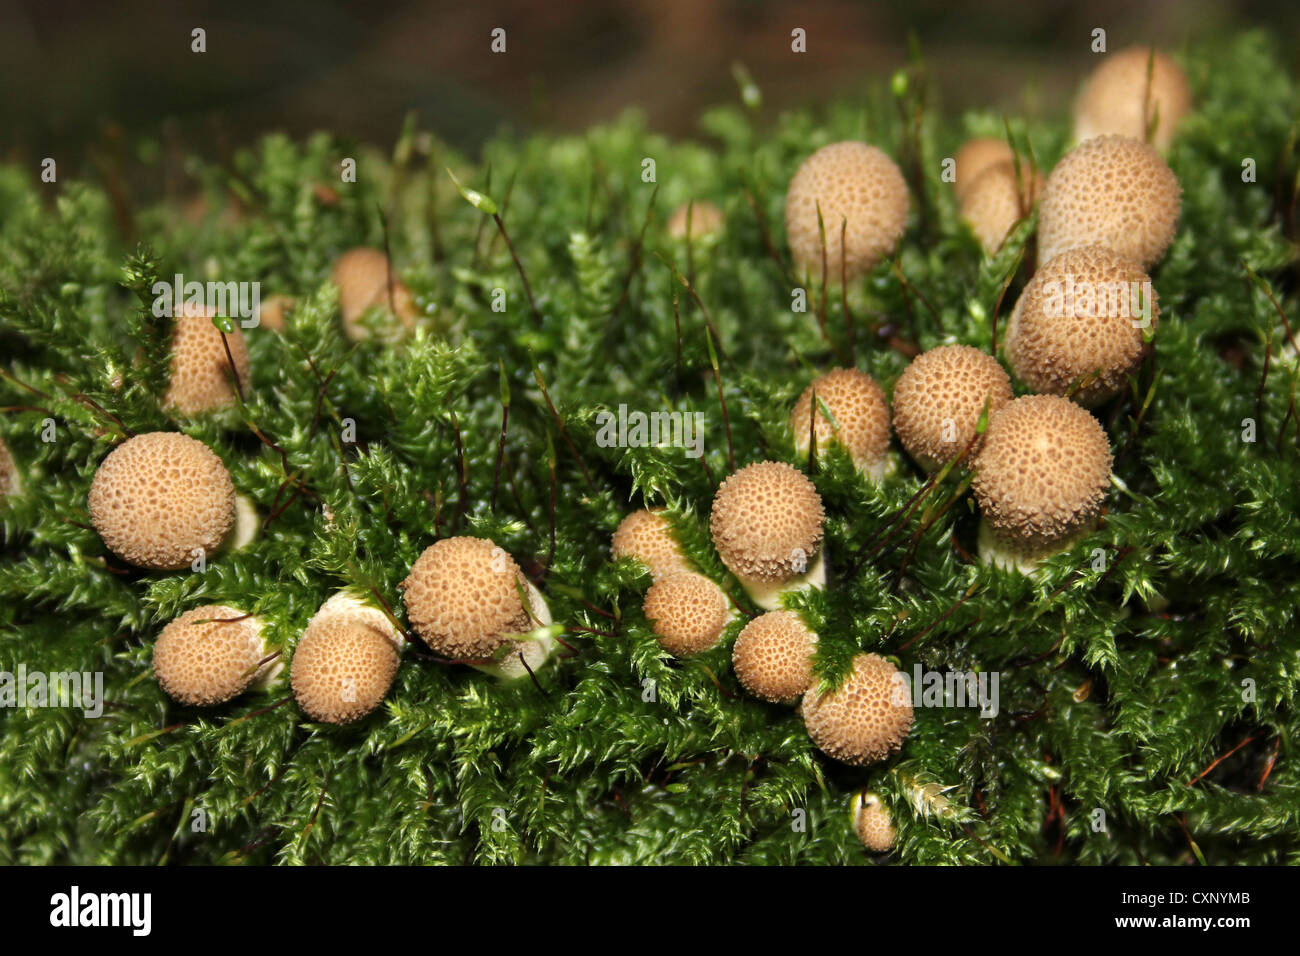 Immature Common Puffballs Lycoperdon perlatum Growing On A Mossy Log Stock Photo